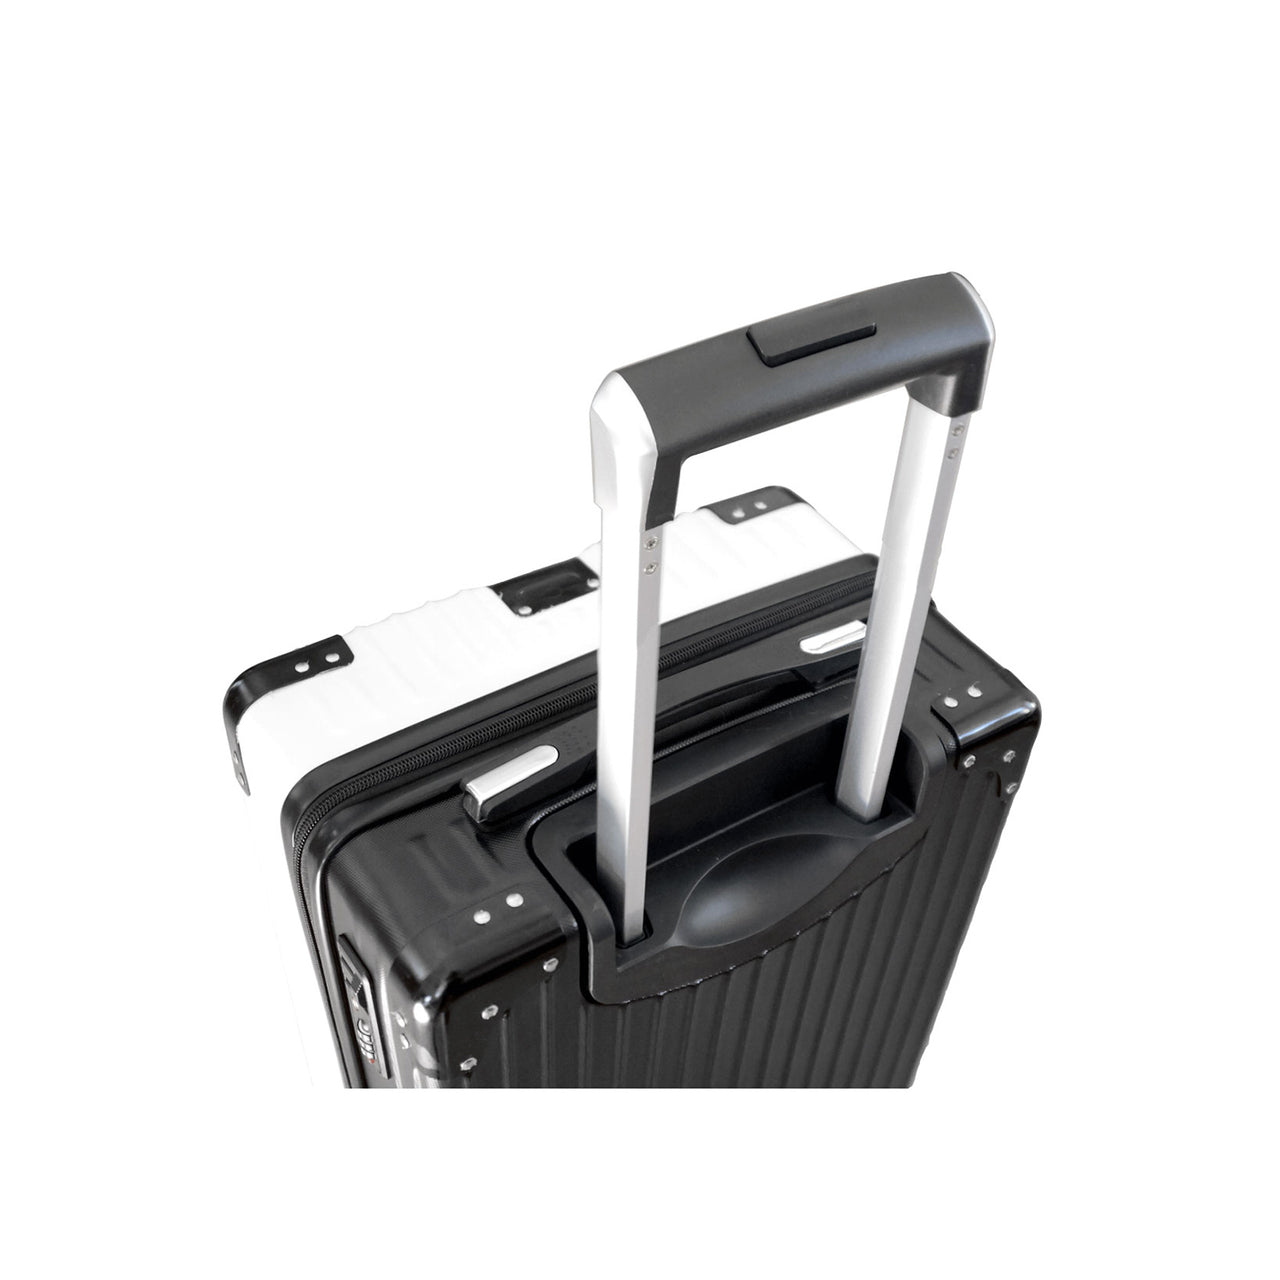 Depaul Premium 2-Toned 21" Carry-On Hardcase